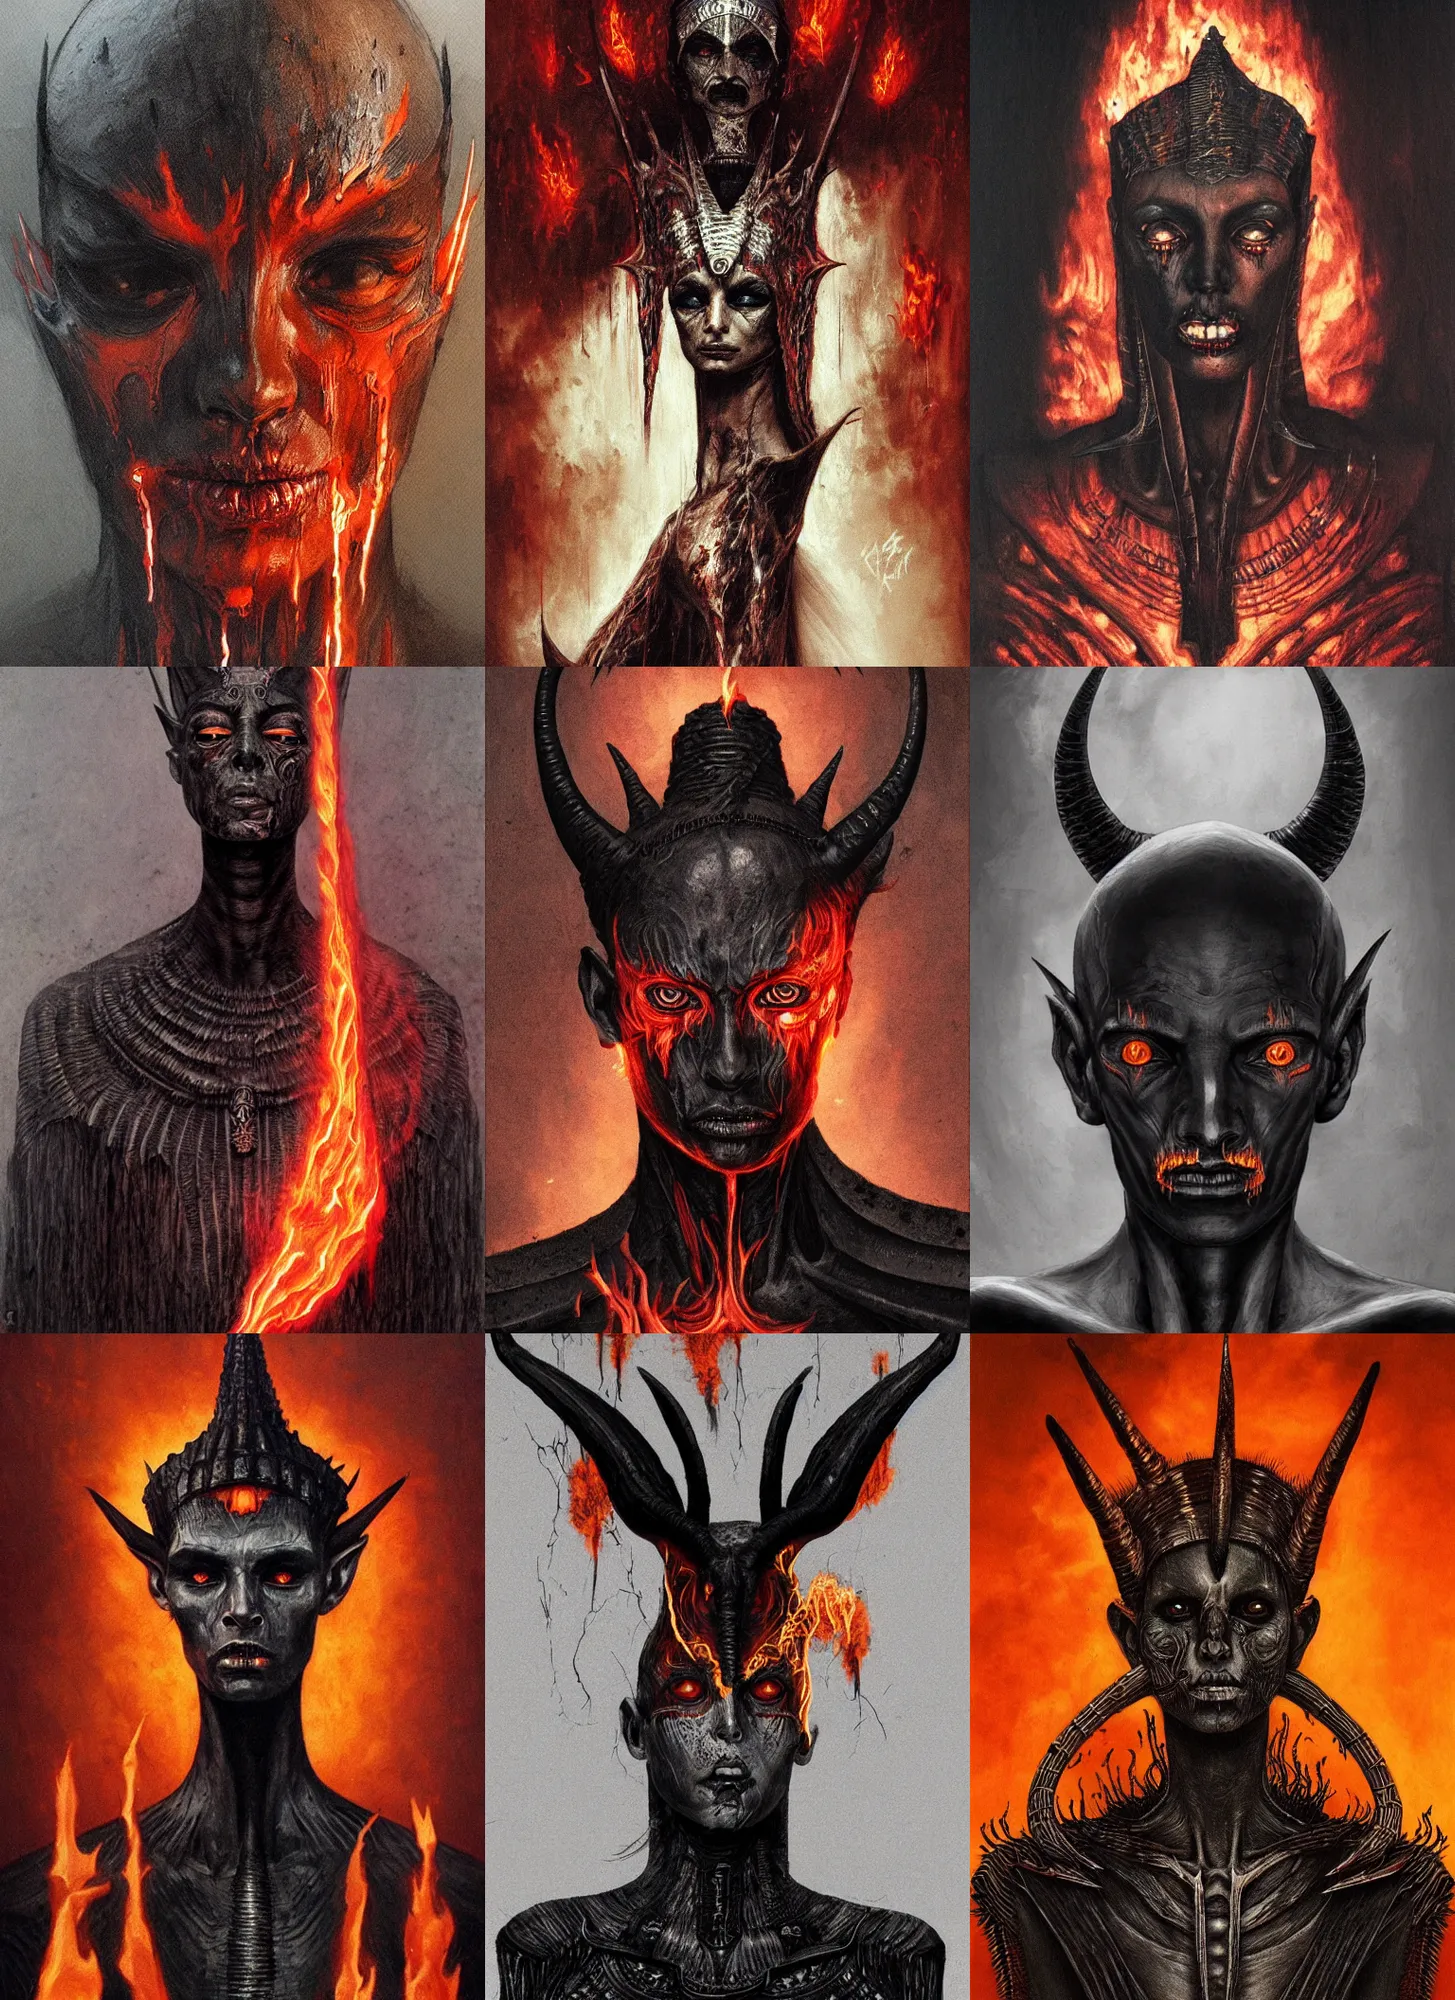 Prompt: black skinny corpse portrait horns, flaming eyes, hell, pharaoh clothes, intricate, dark, highly detailed, artstation, sharp focus, illustration, beksinski